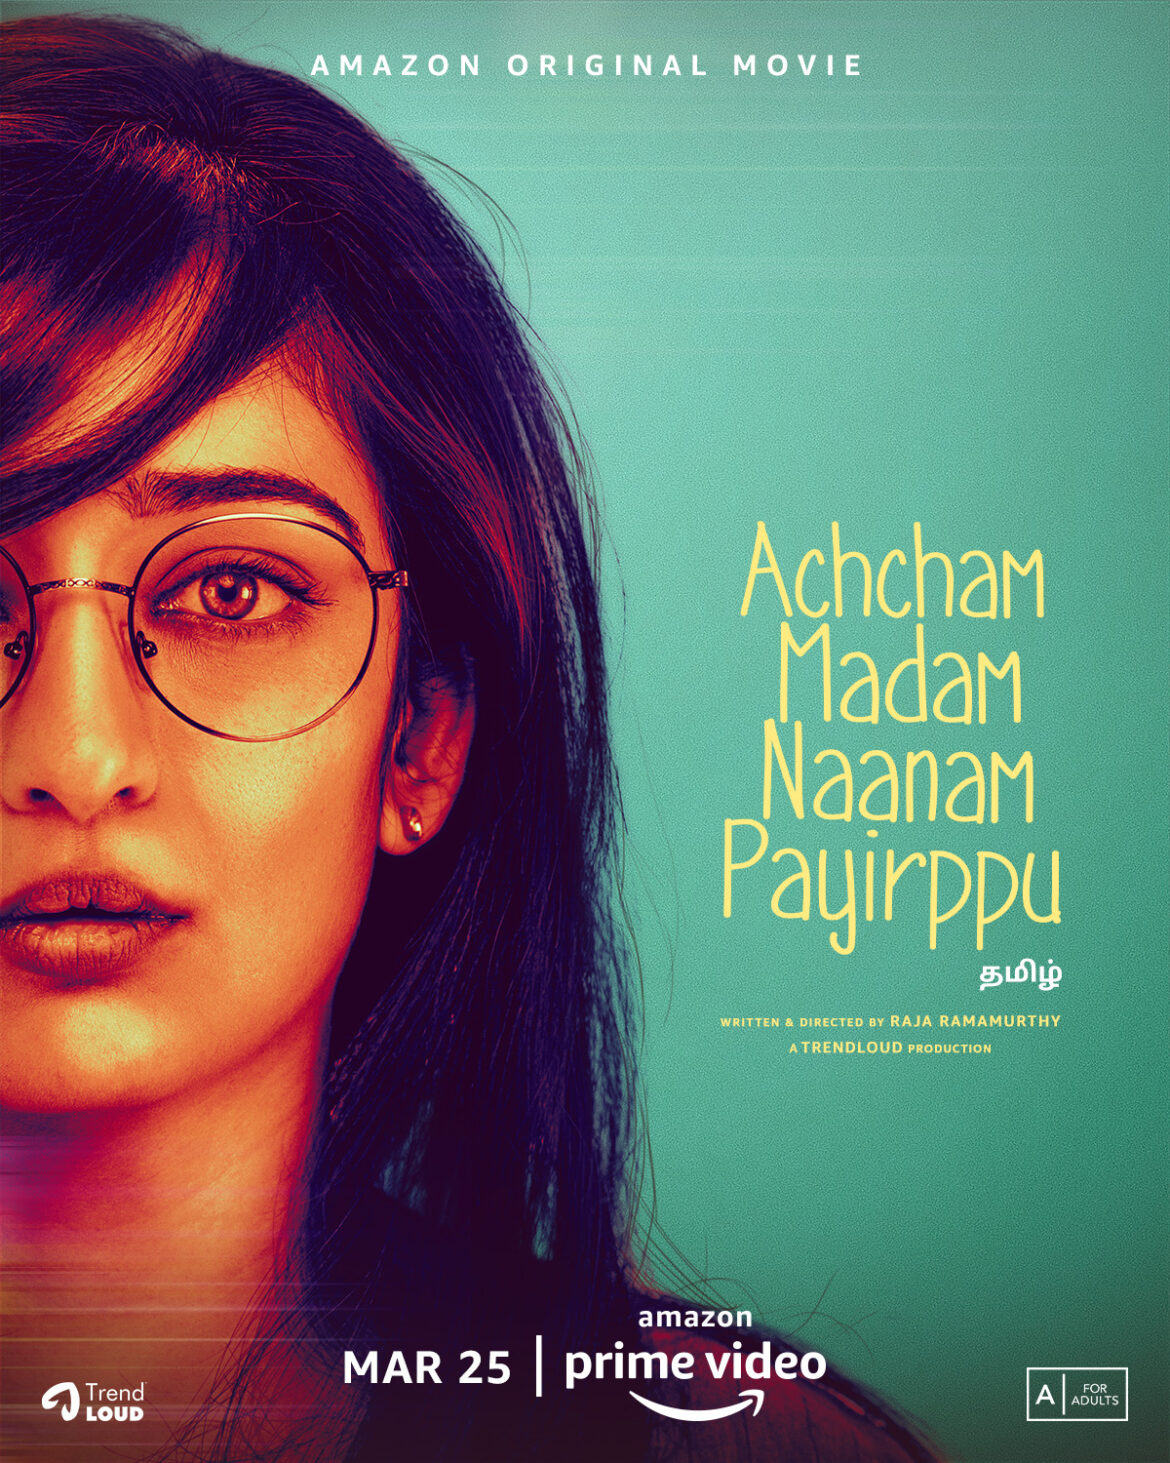 Amazon Original Movie Achcham Madam Naanam Payirppu to Premiere in India on Prime Video